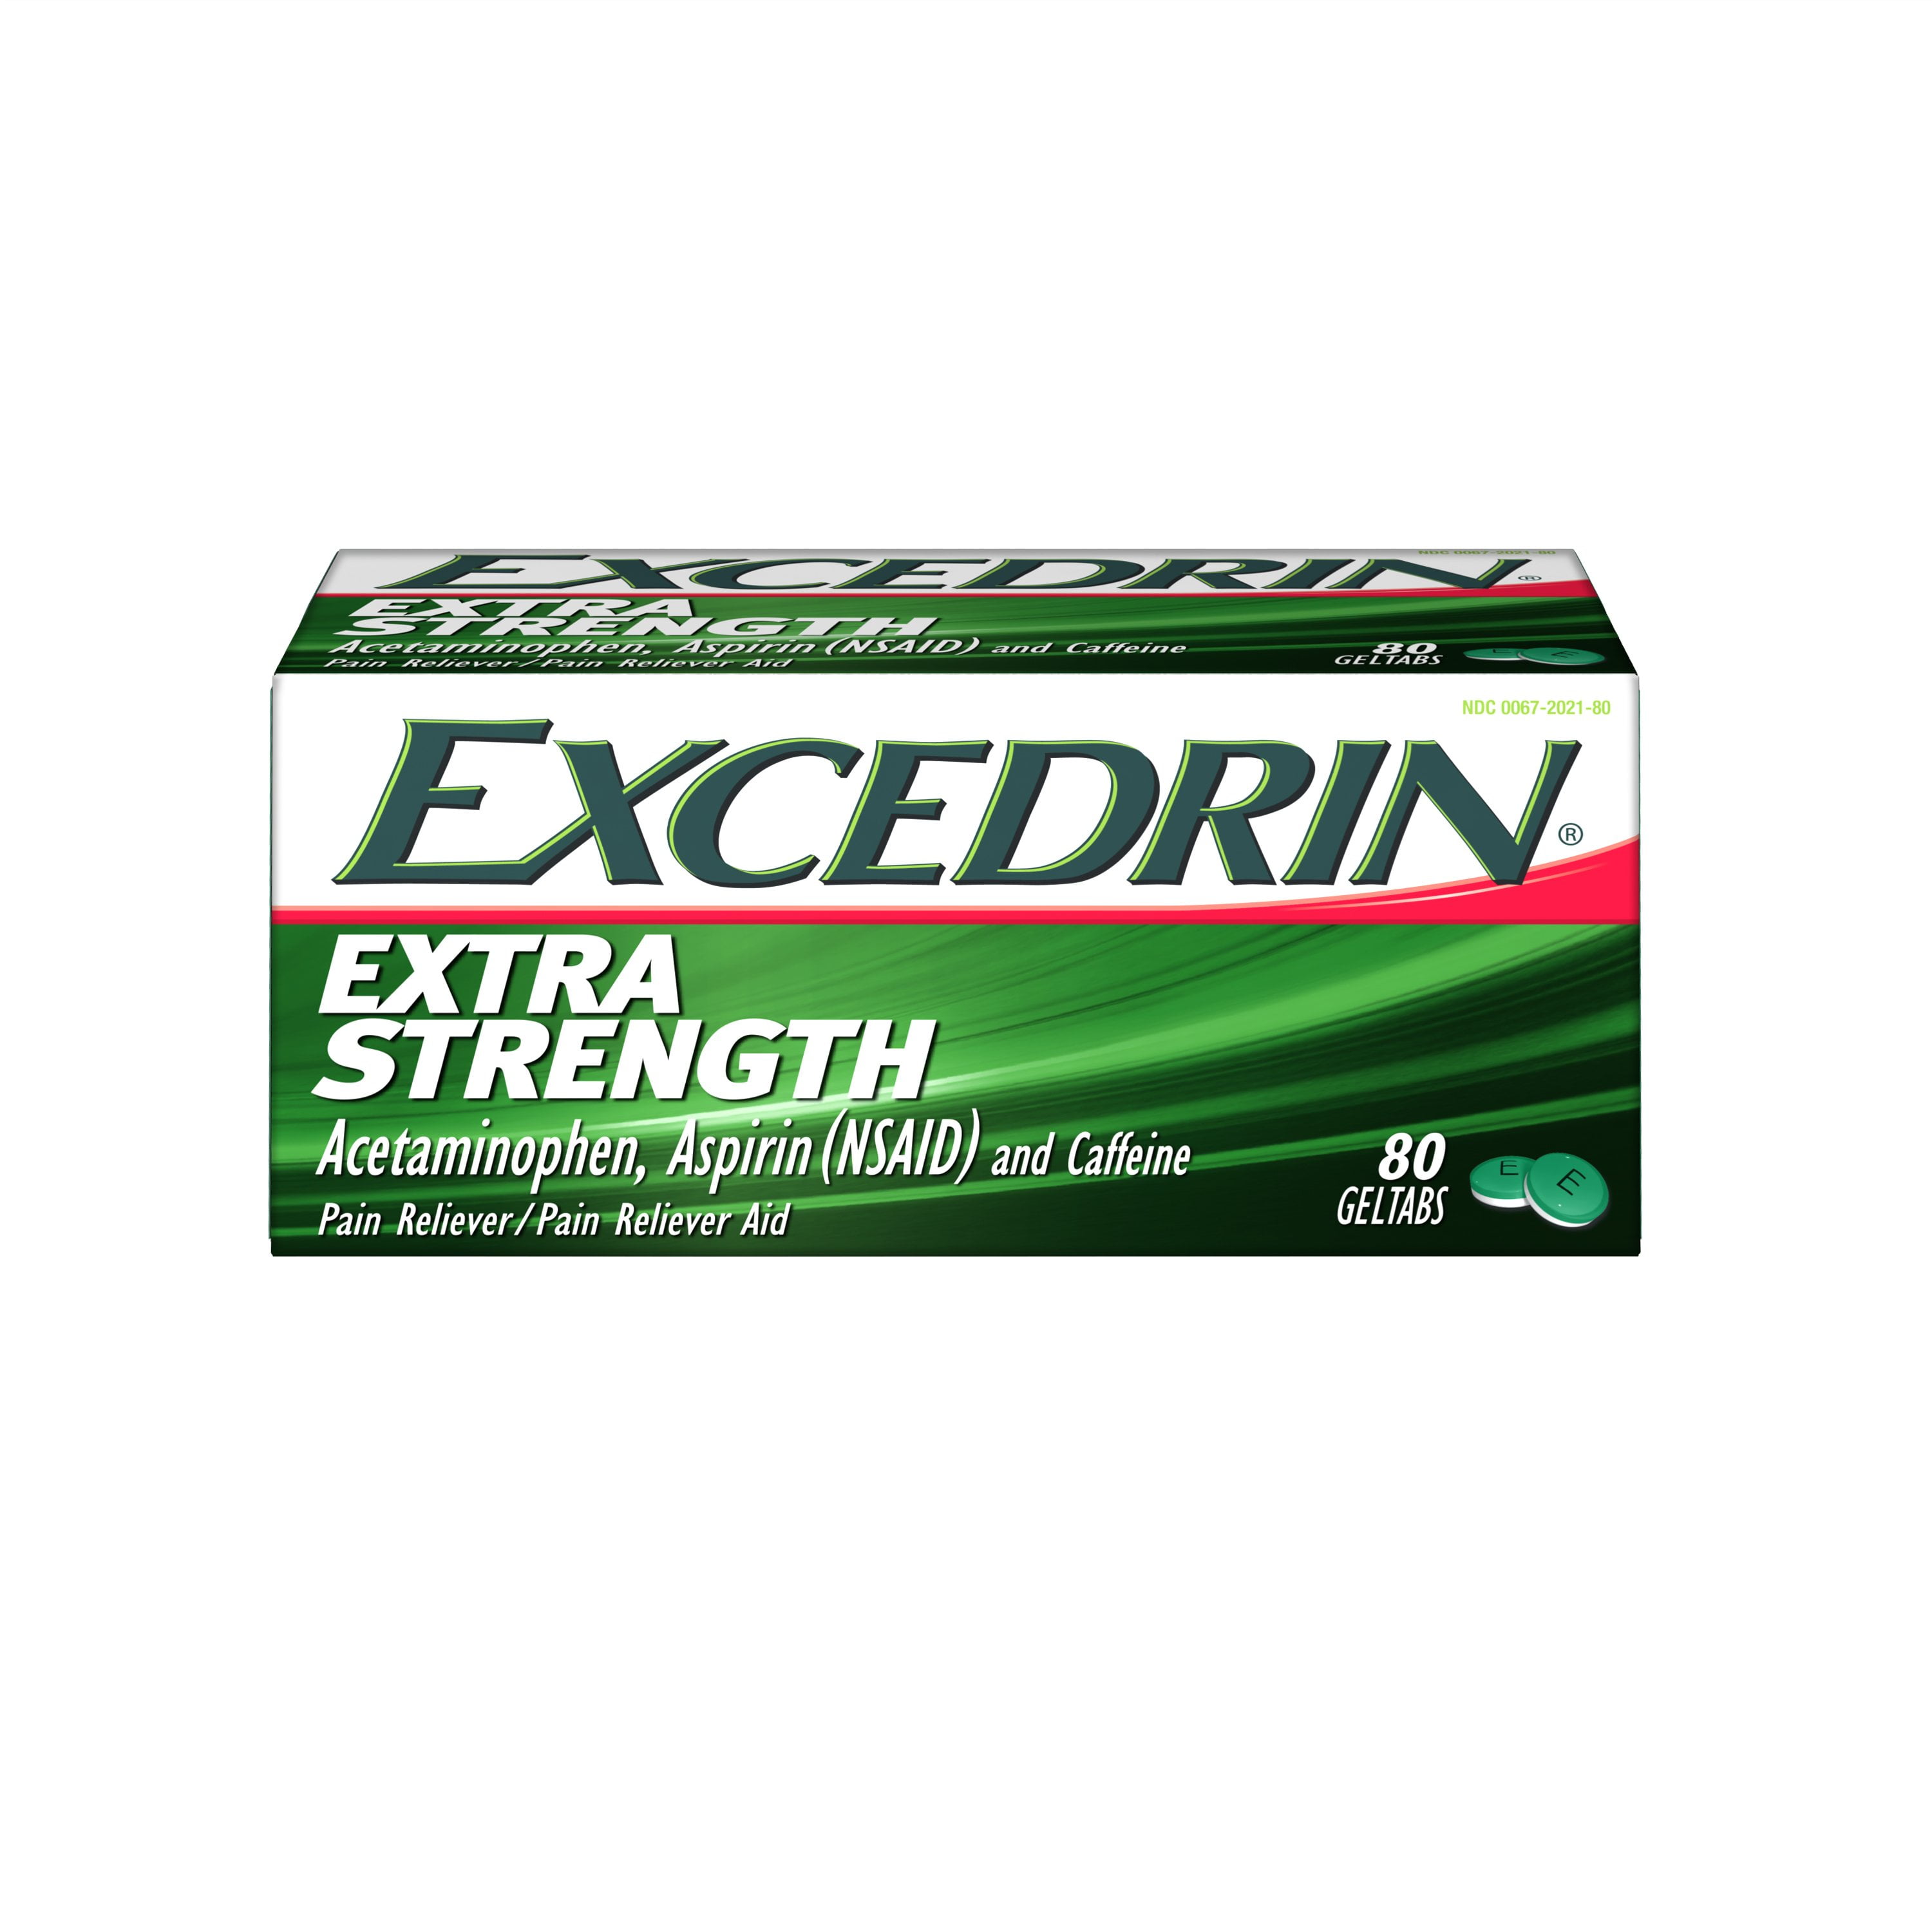 Excedrin Extra Strength Geltabs Headache Relief 80 Count 